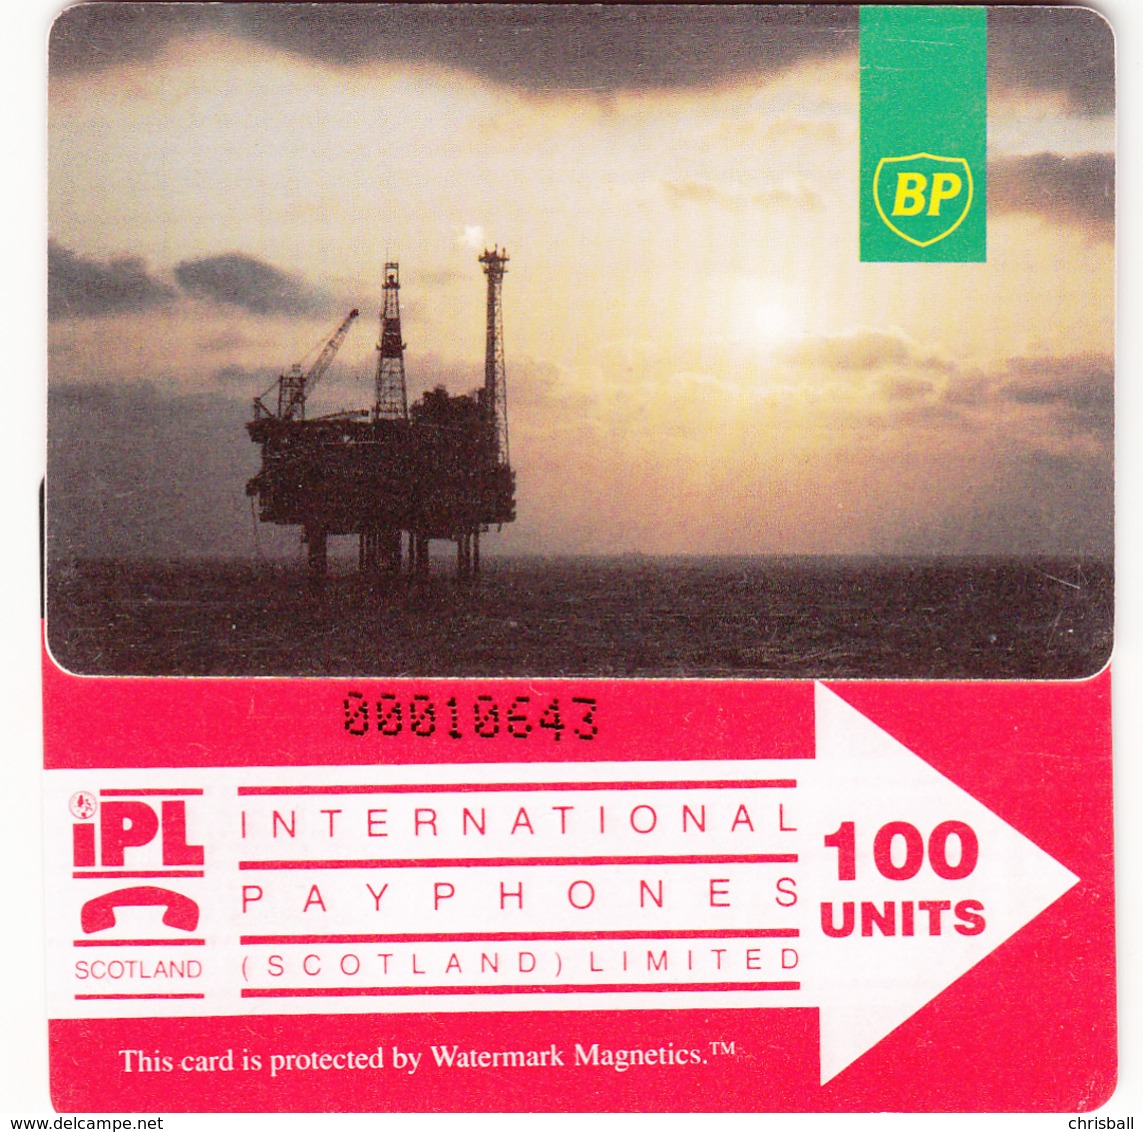 BT Oil Rig Phonecard - British Petroleum 100unit (IPLS) - Superb Fine Used Condition - [ 2] Oil Drilling Rig